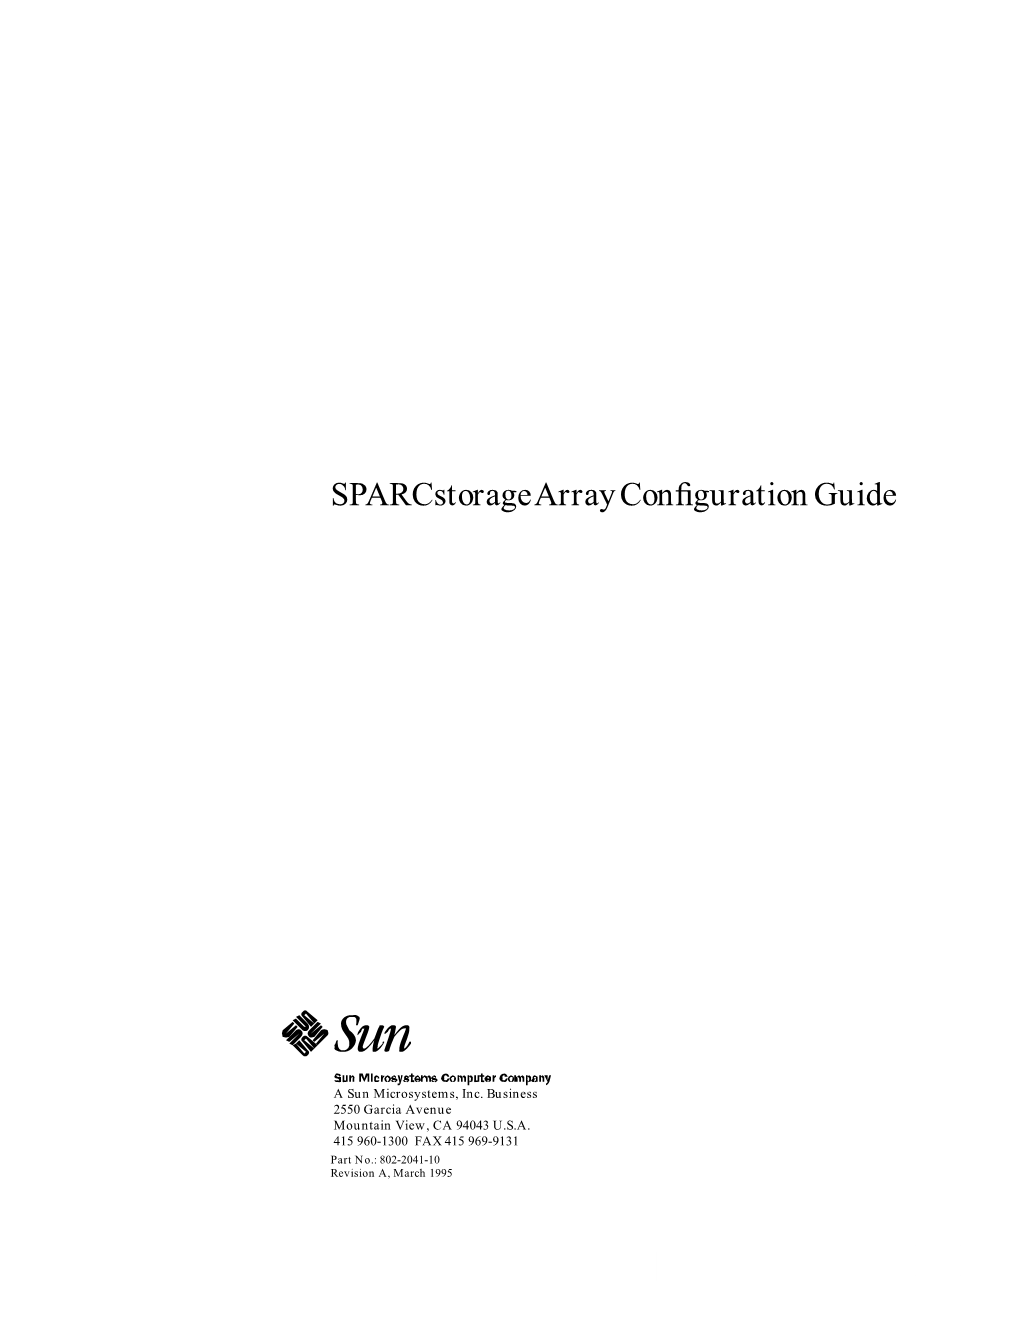 Sparcstorage Array Configuration Guide